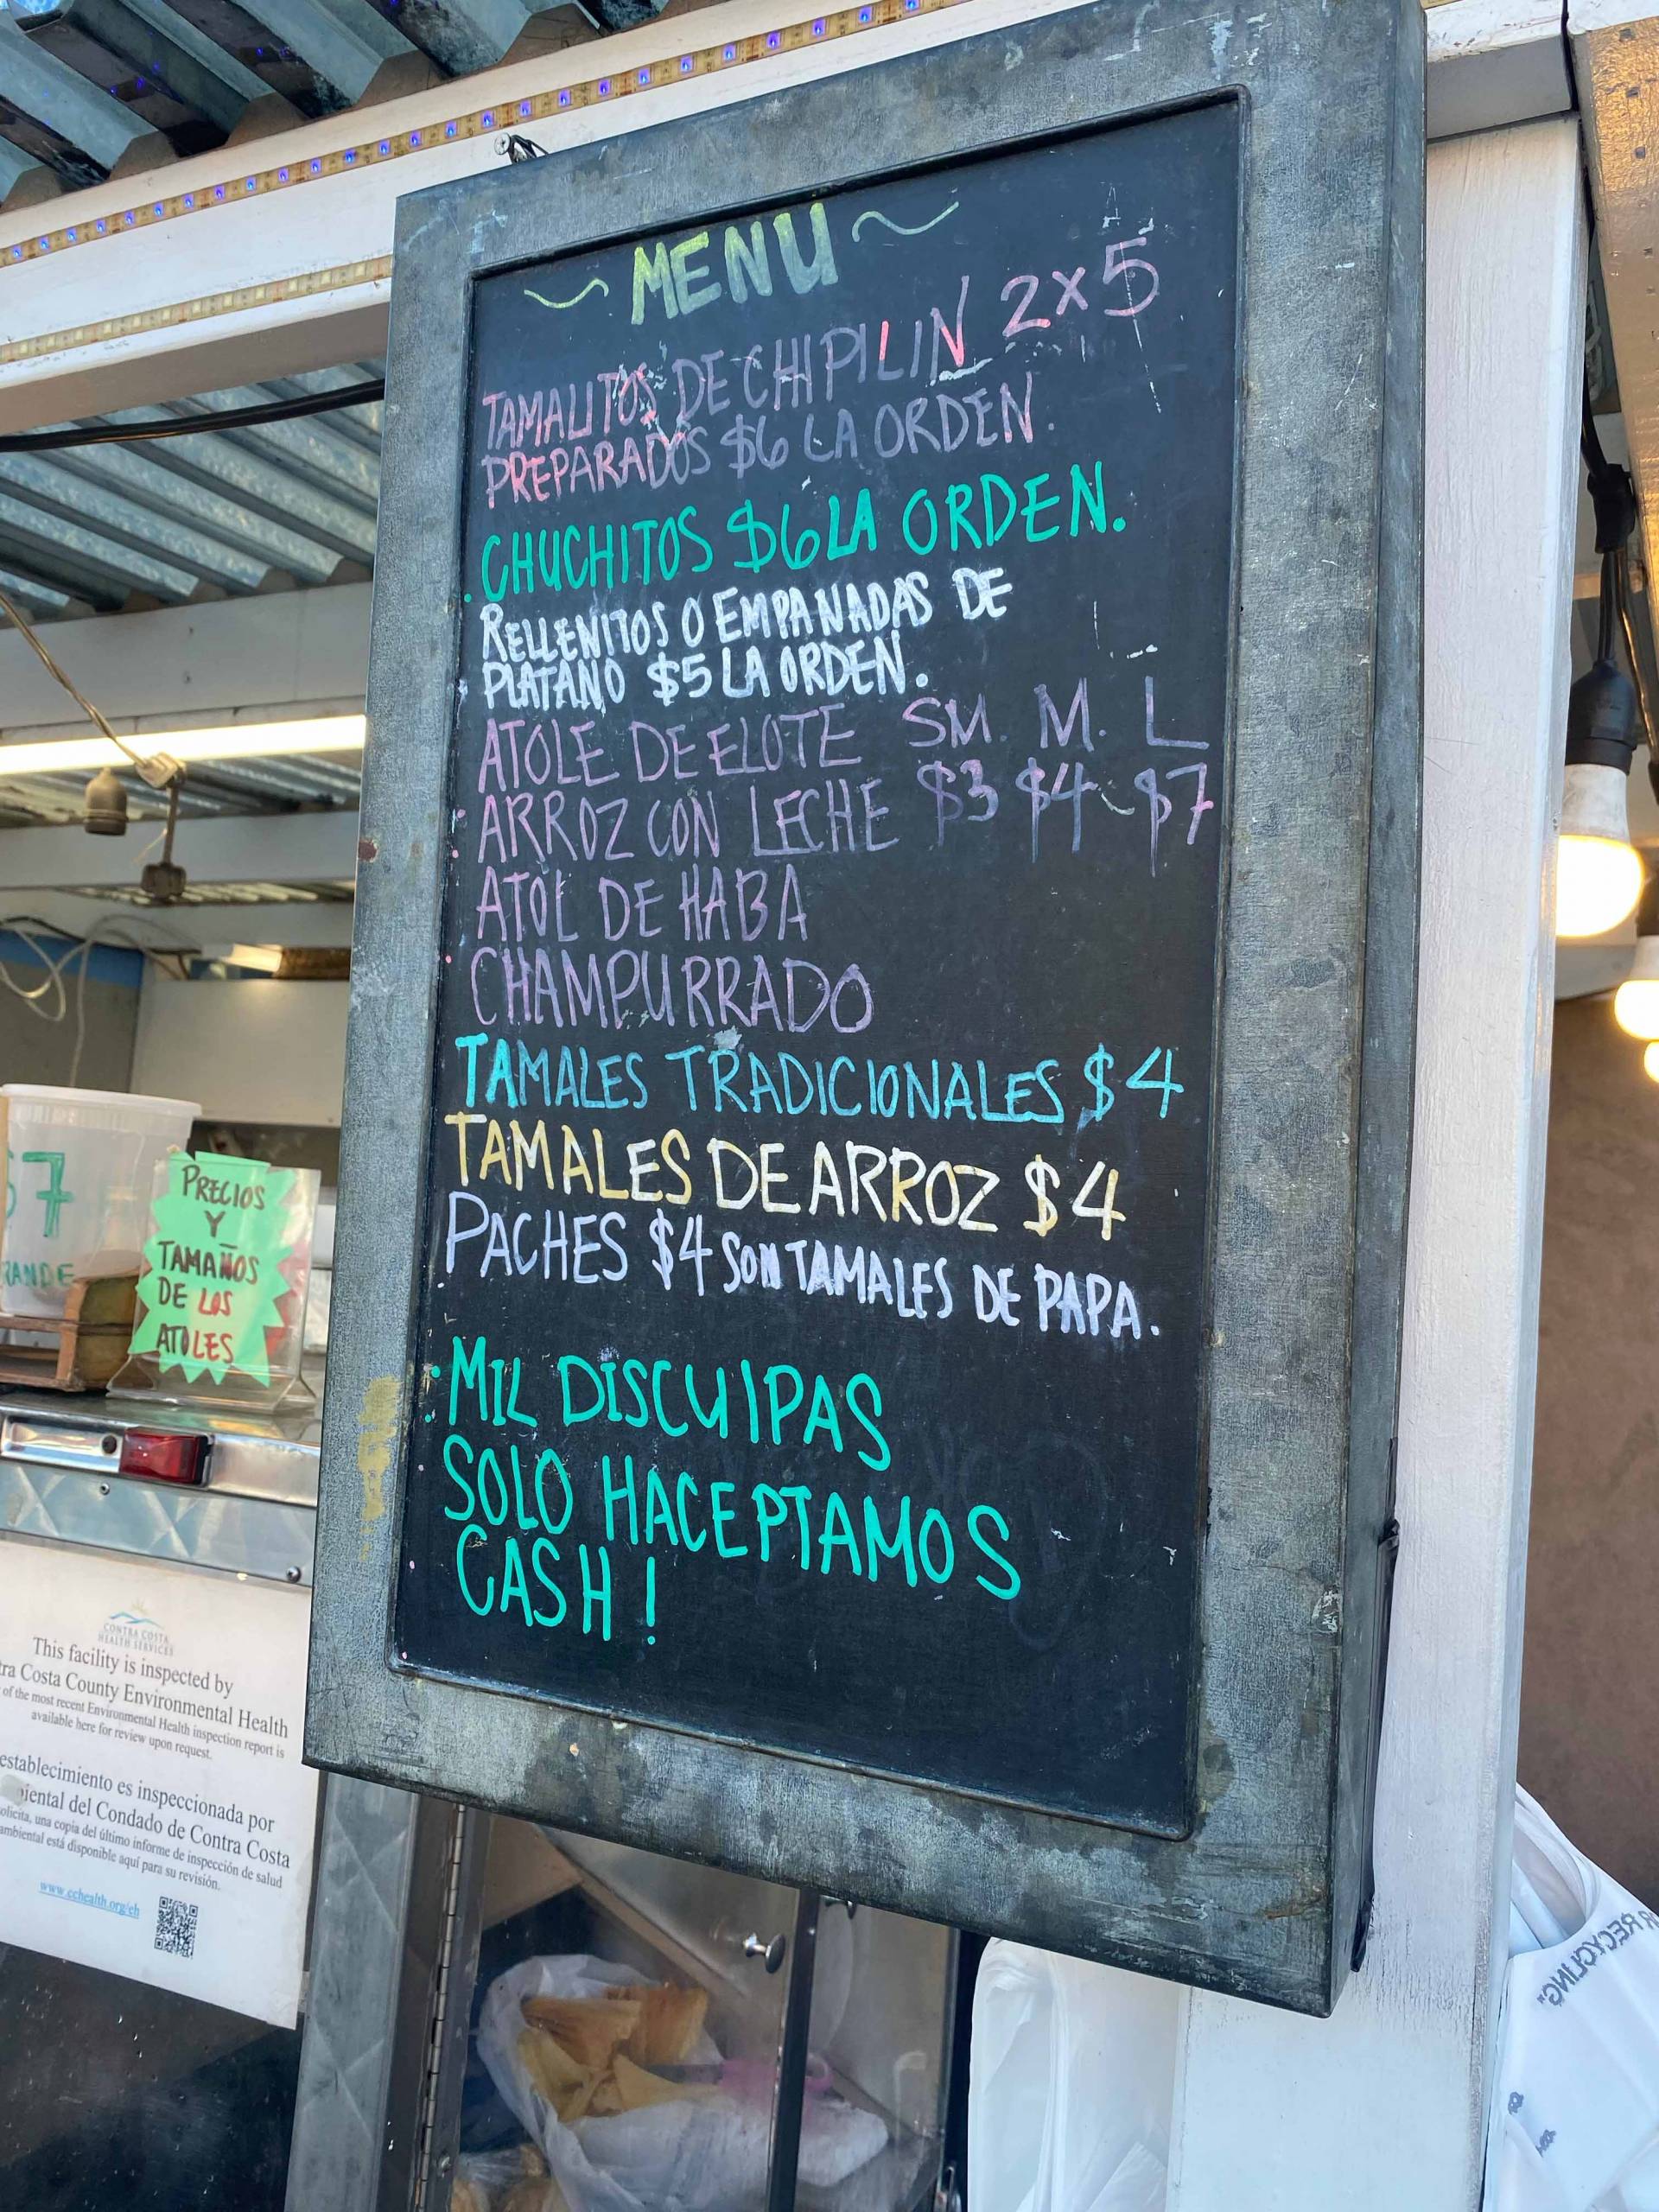 The menu signboard in front a food cart: Items include chuchitos, atol de elote, tamales tradicionales and tamales de arroz.